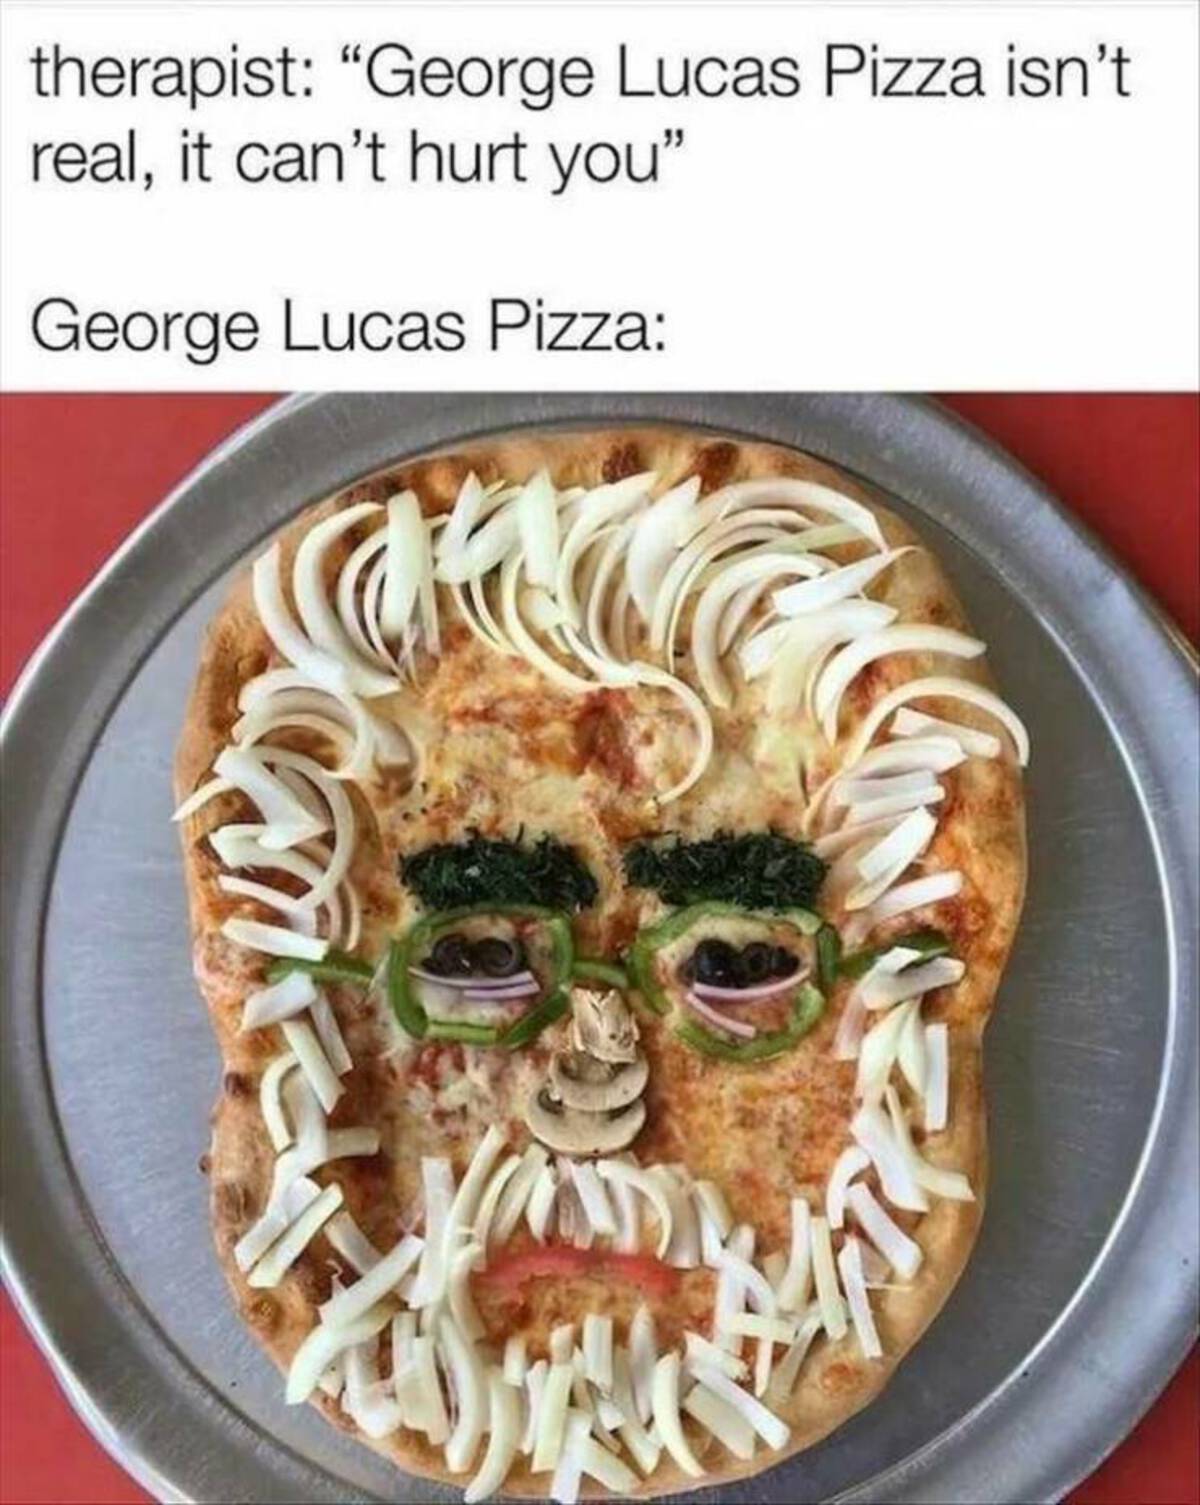 george lucas pizza - therapist